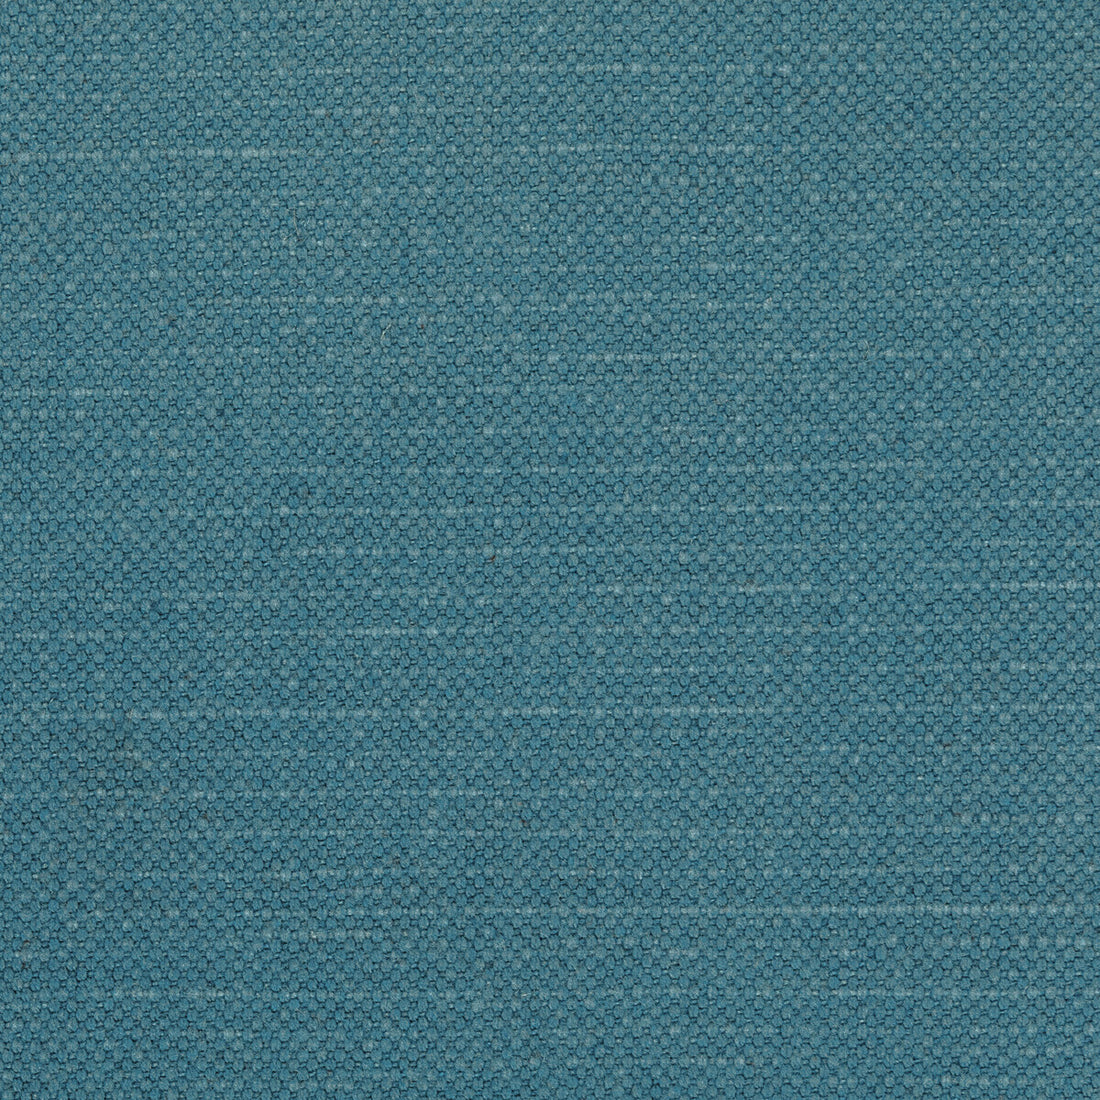 Carson fabric in ocean color - pattern 36282.505.0 - by Kravet Basics